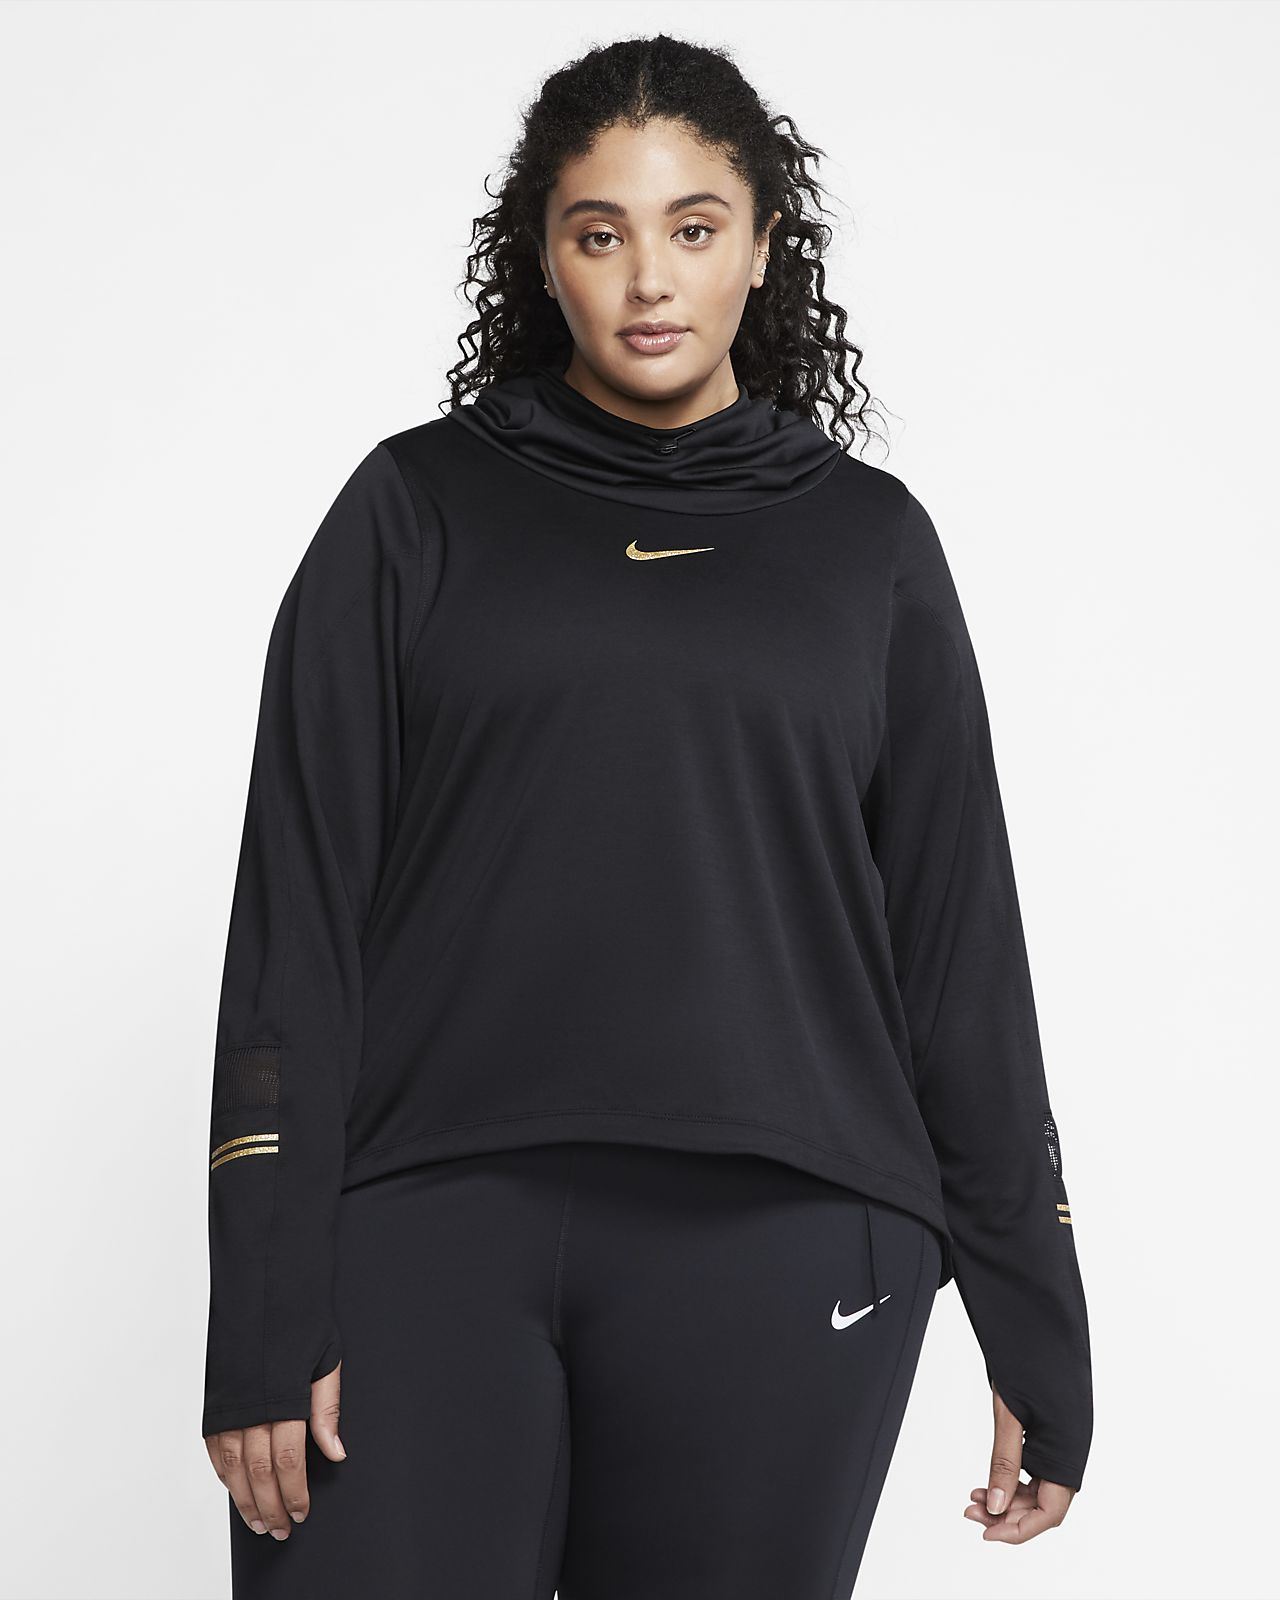 Nike Womens Top Size Chart